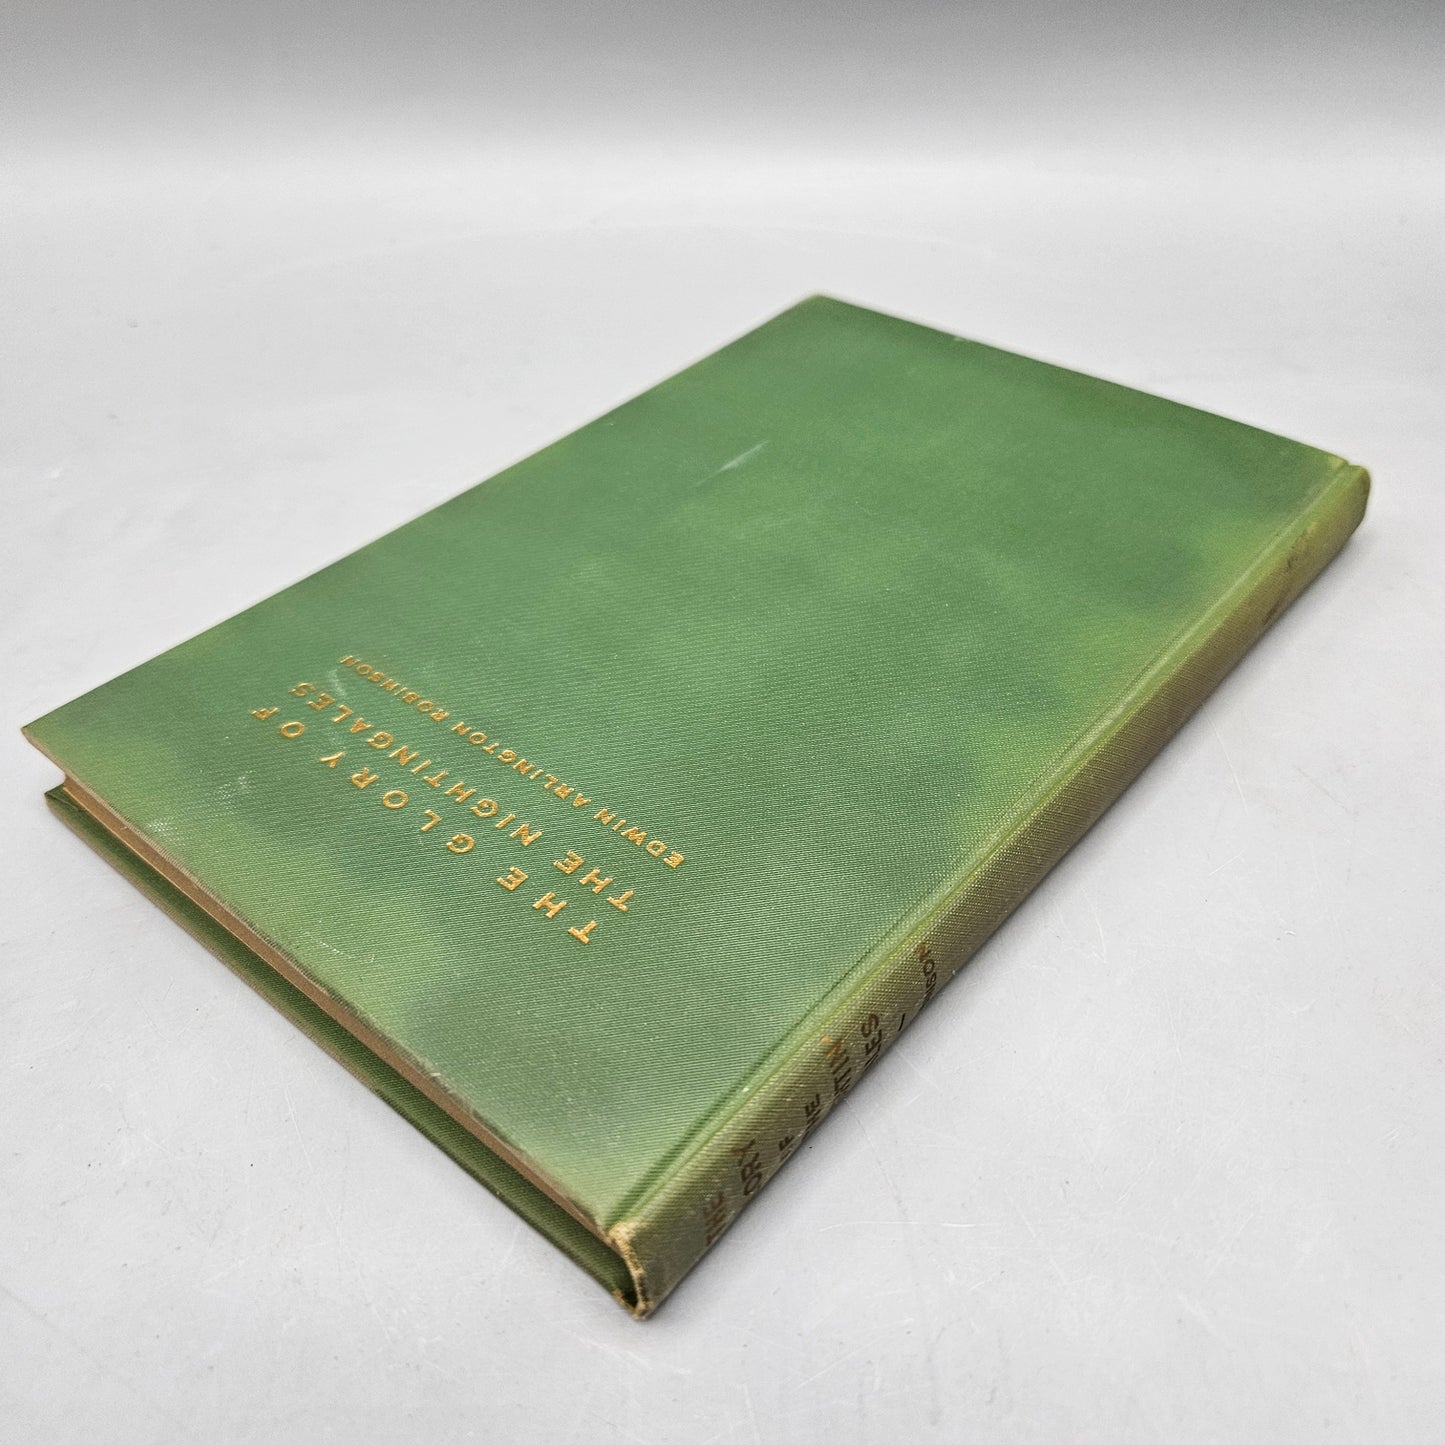 Book: The Glory of The Nightingales by Edwin Arlington Robinson 1930